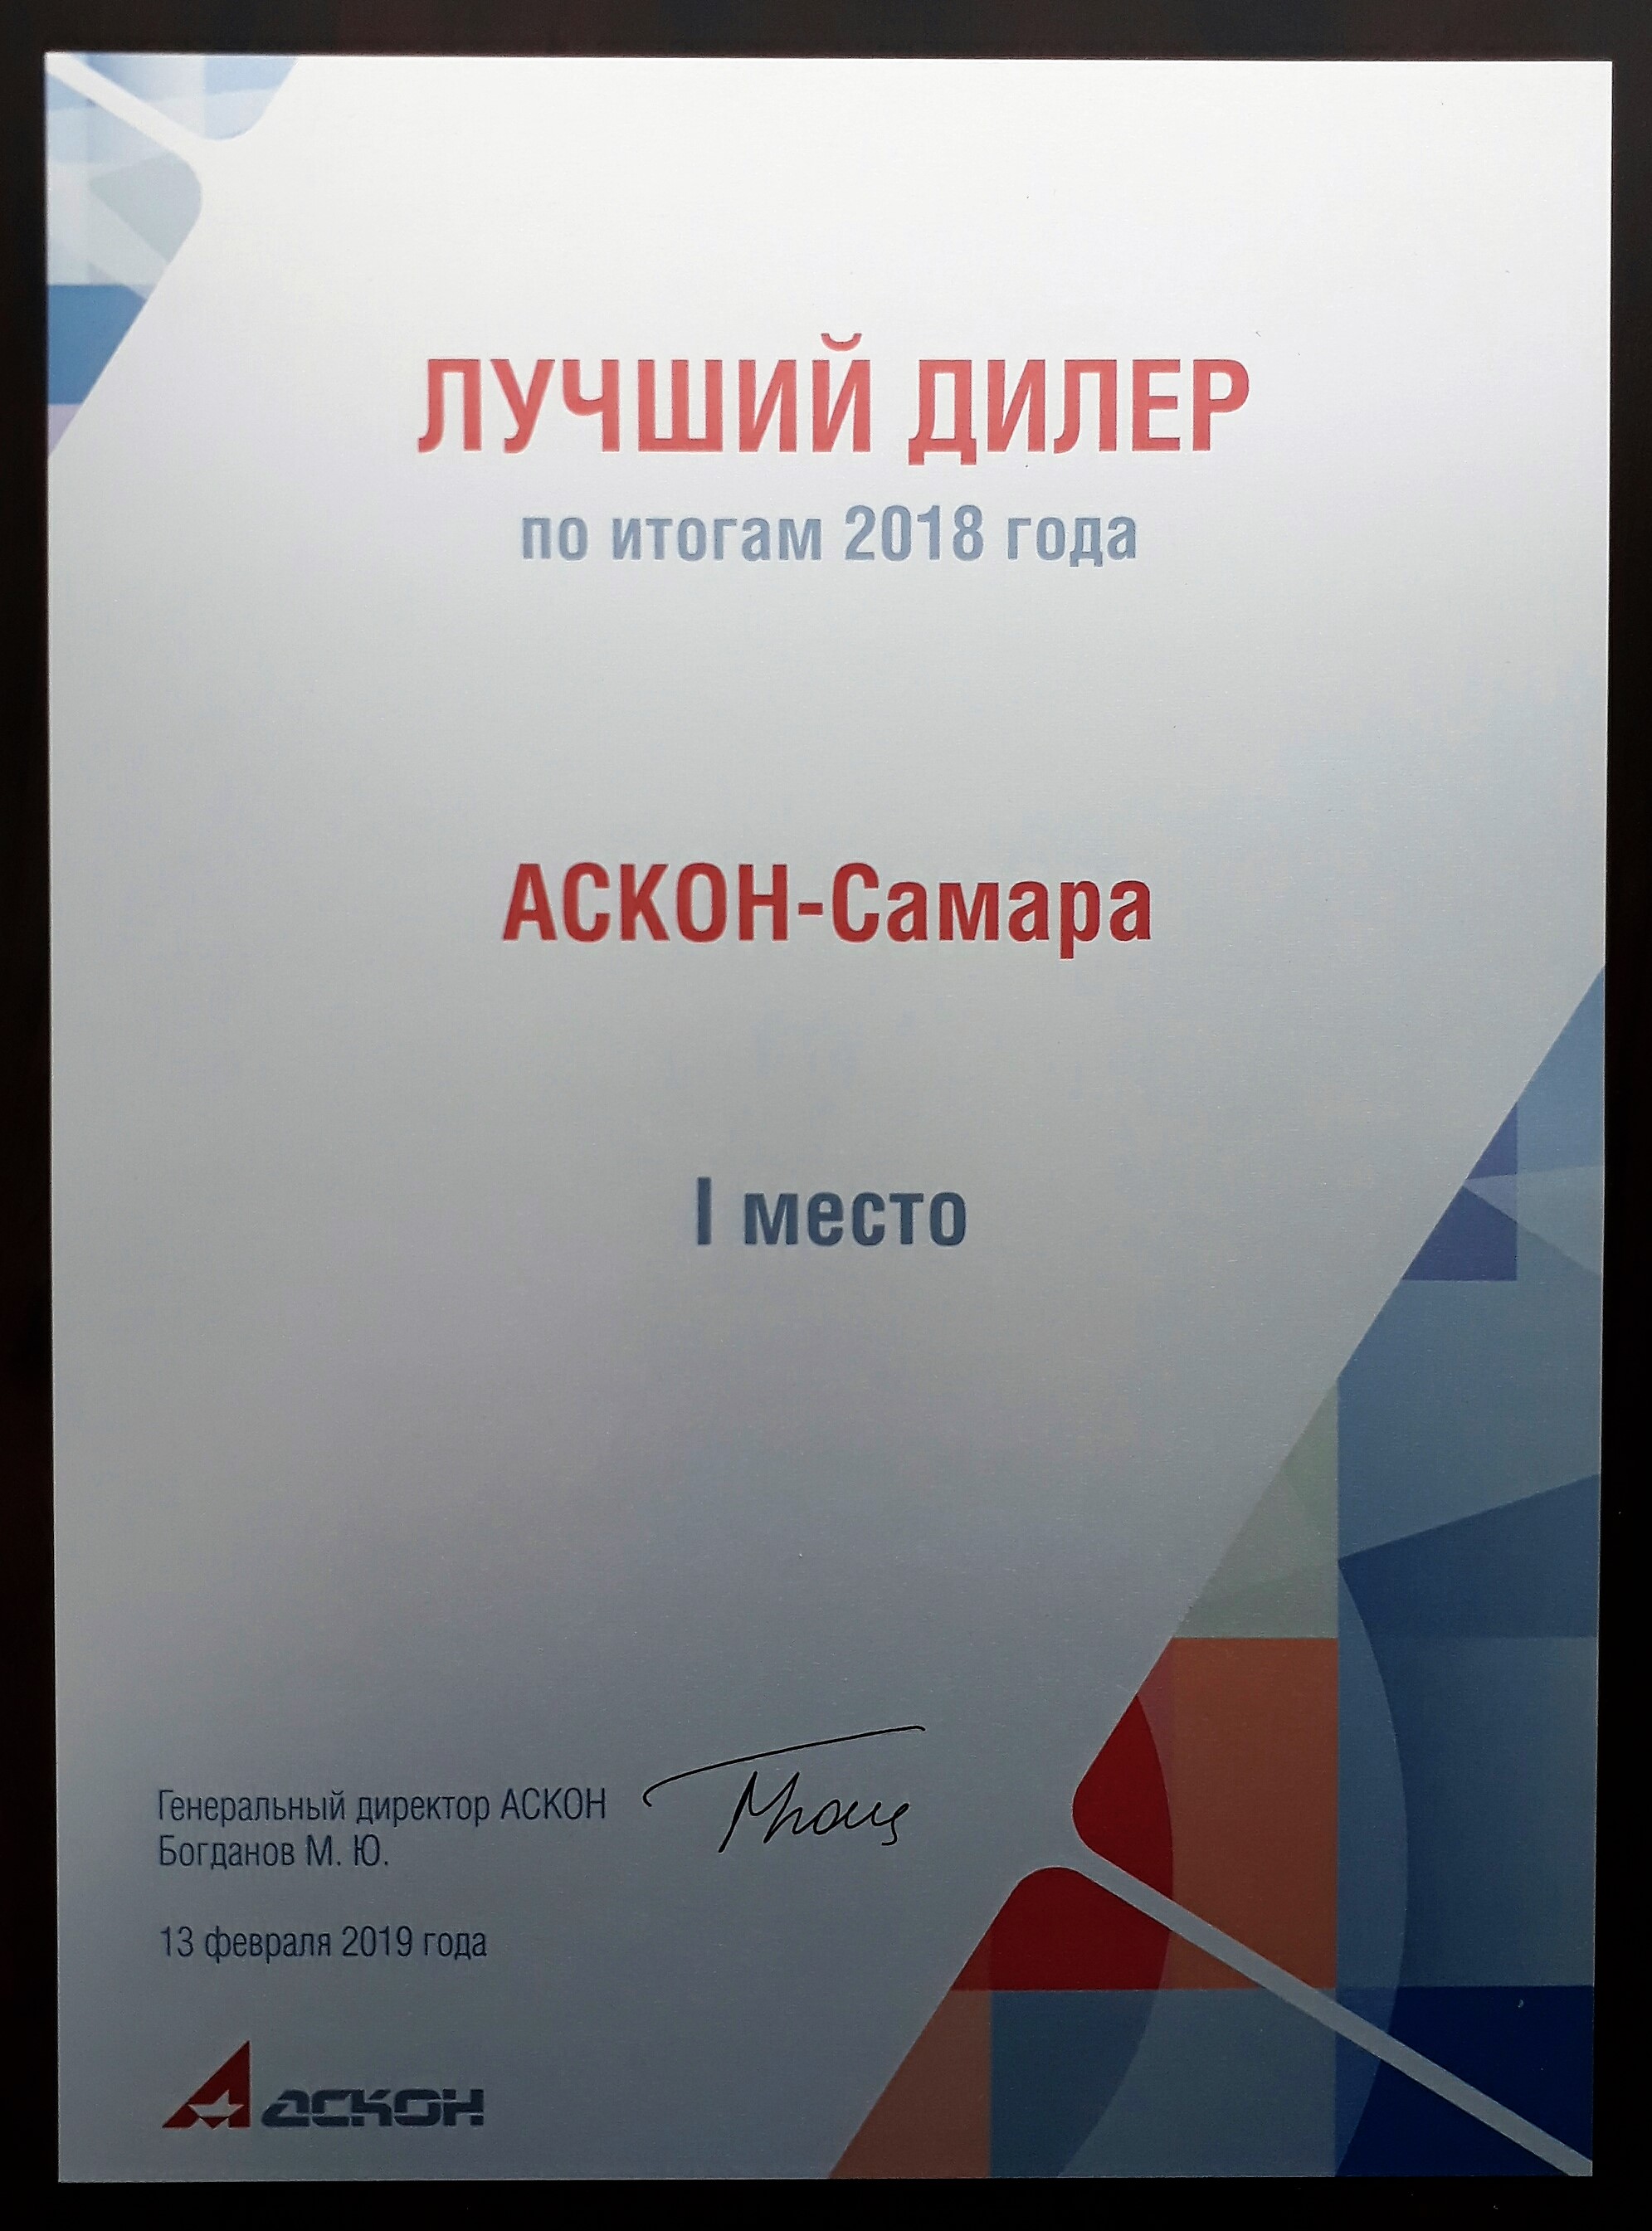 АСКОН-Самара признана лучшим партнером АСКОН по итогам 2018 года